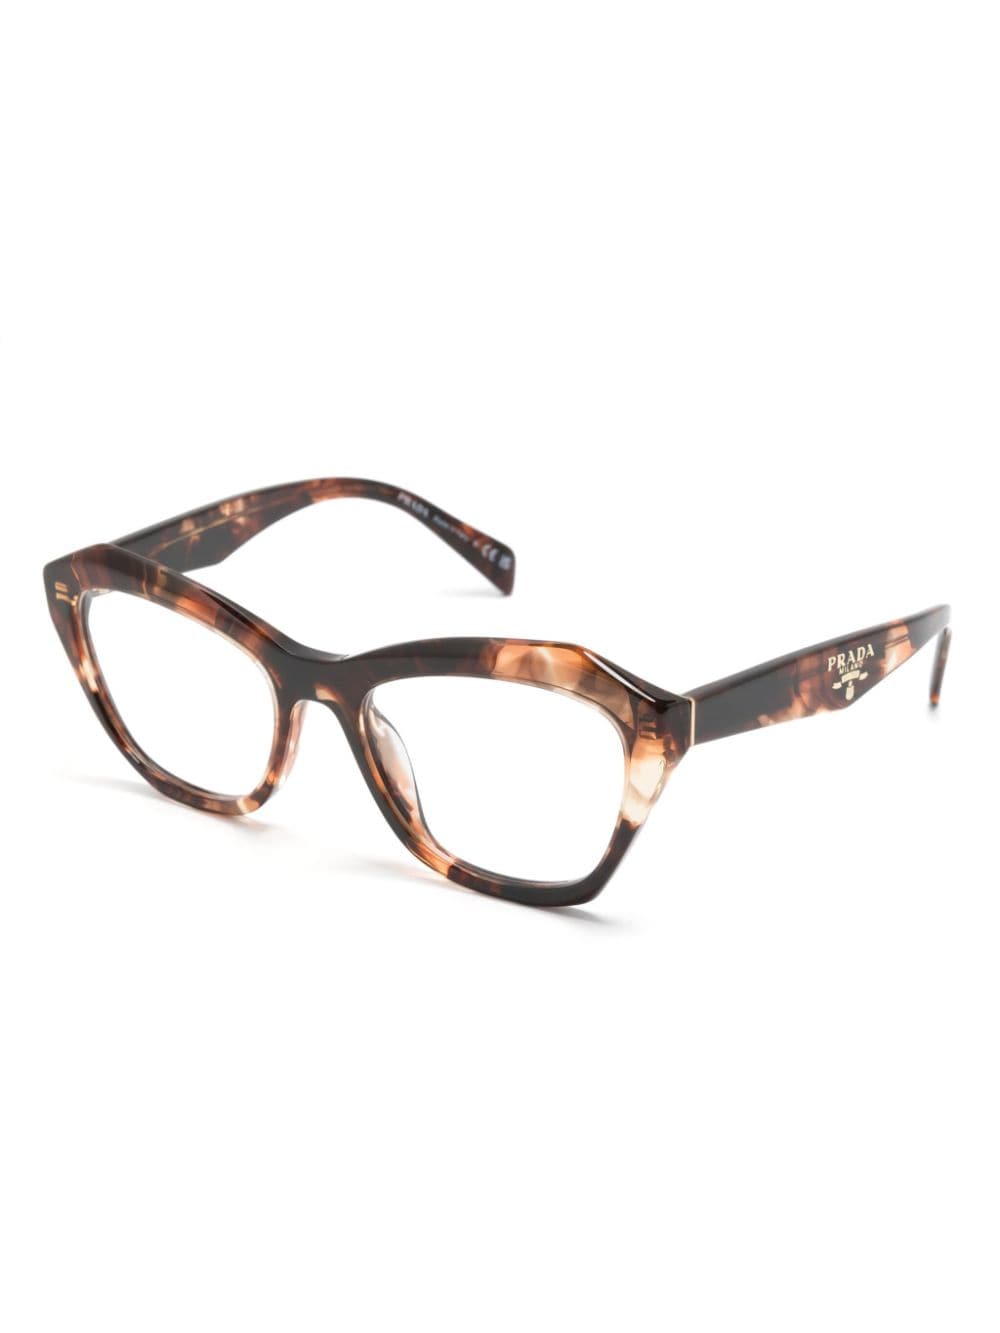 Prada Eyewear tortoiseshell cat-eye glasses - Bruin